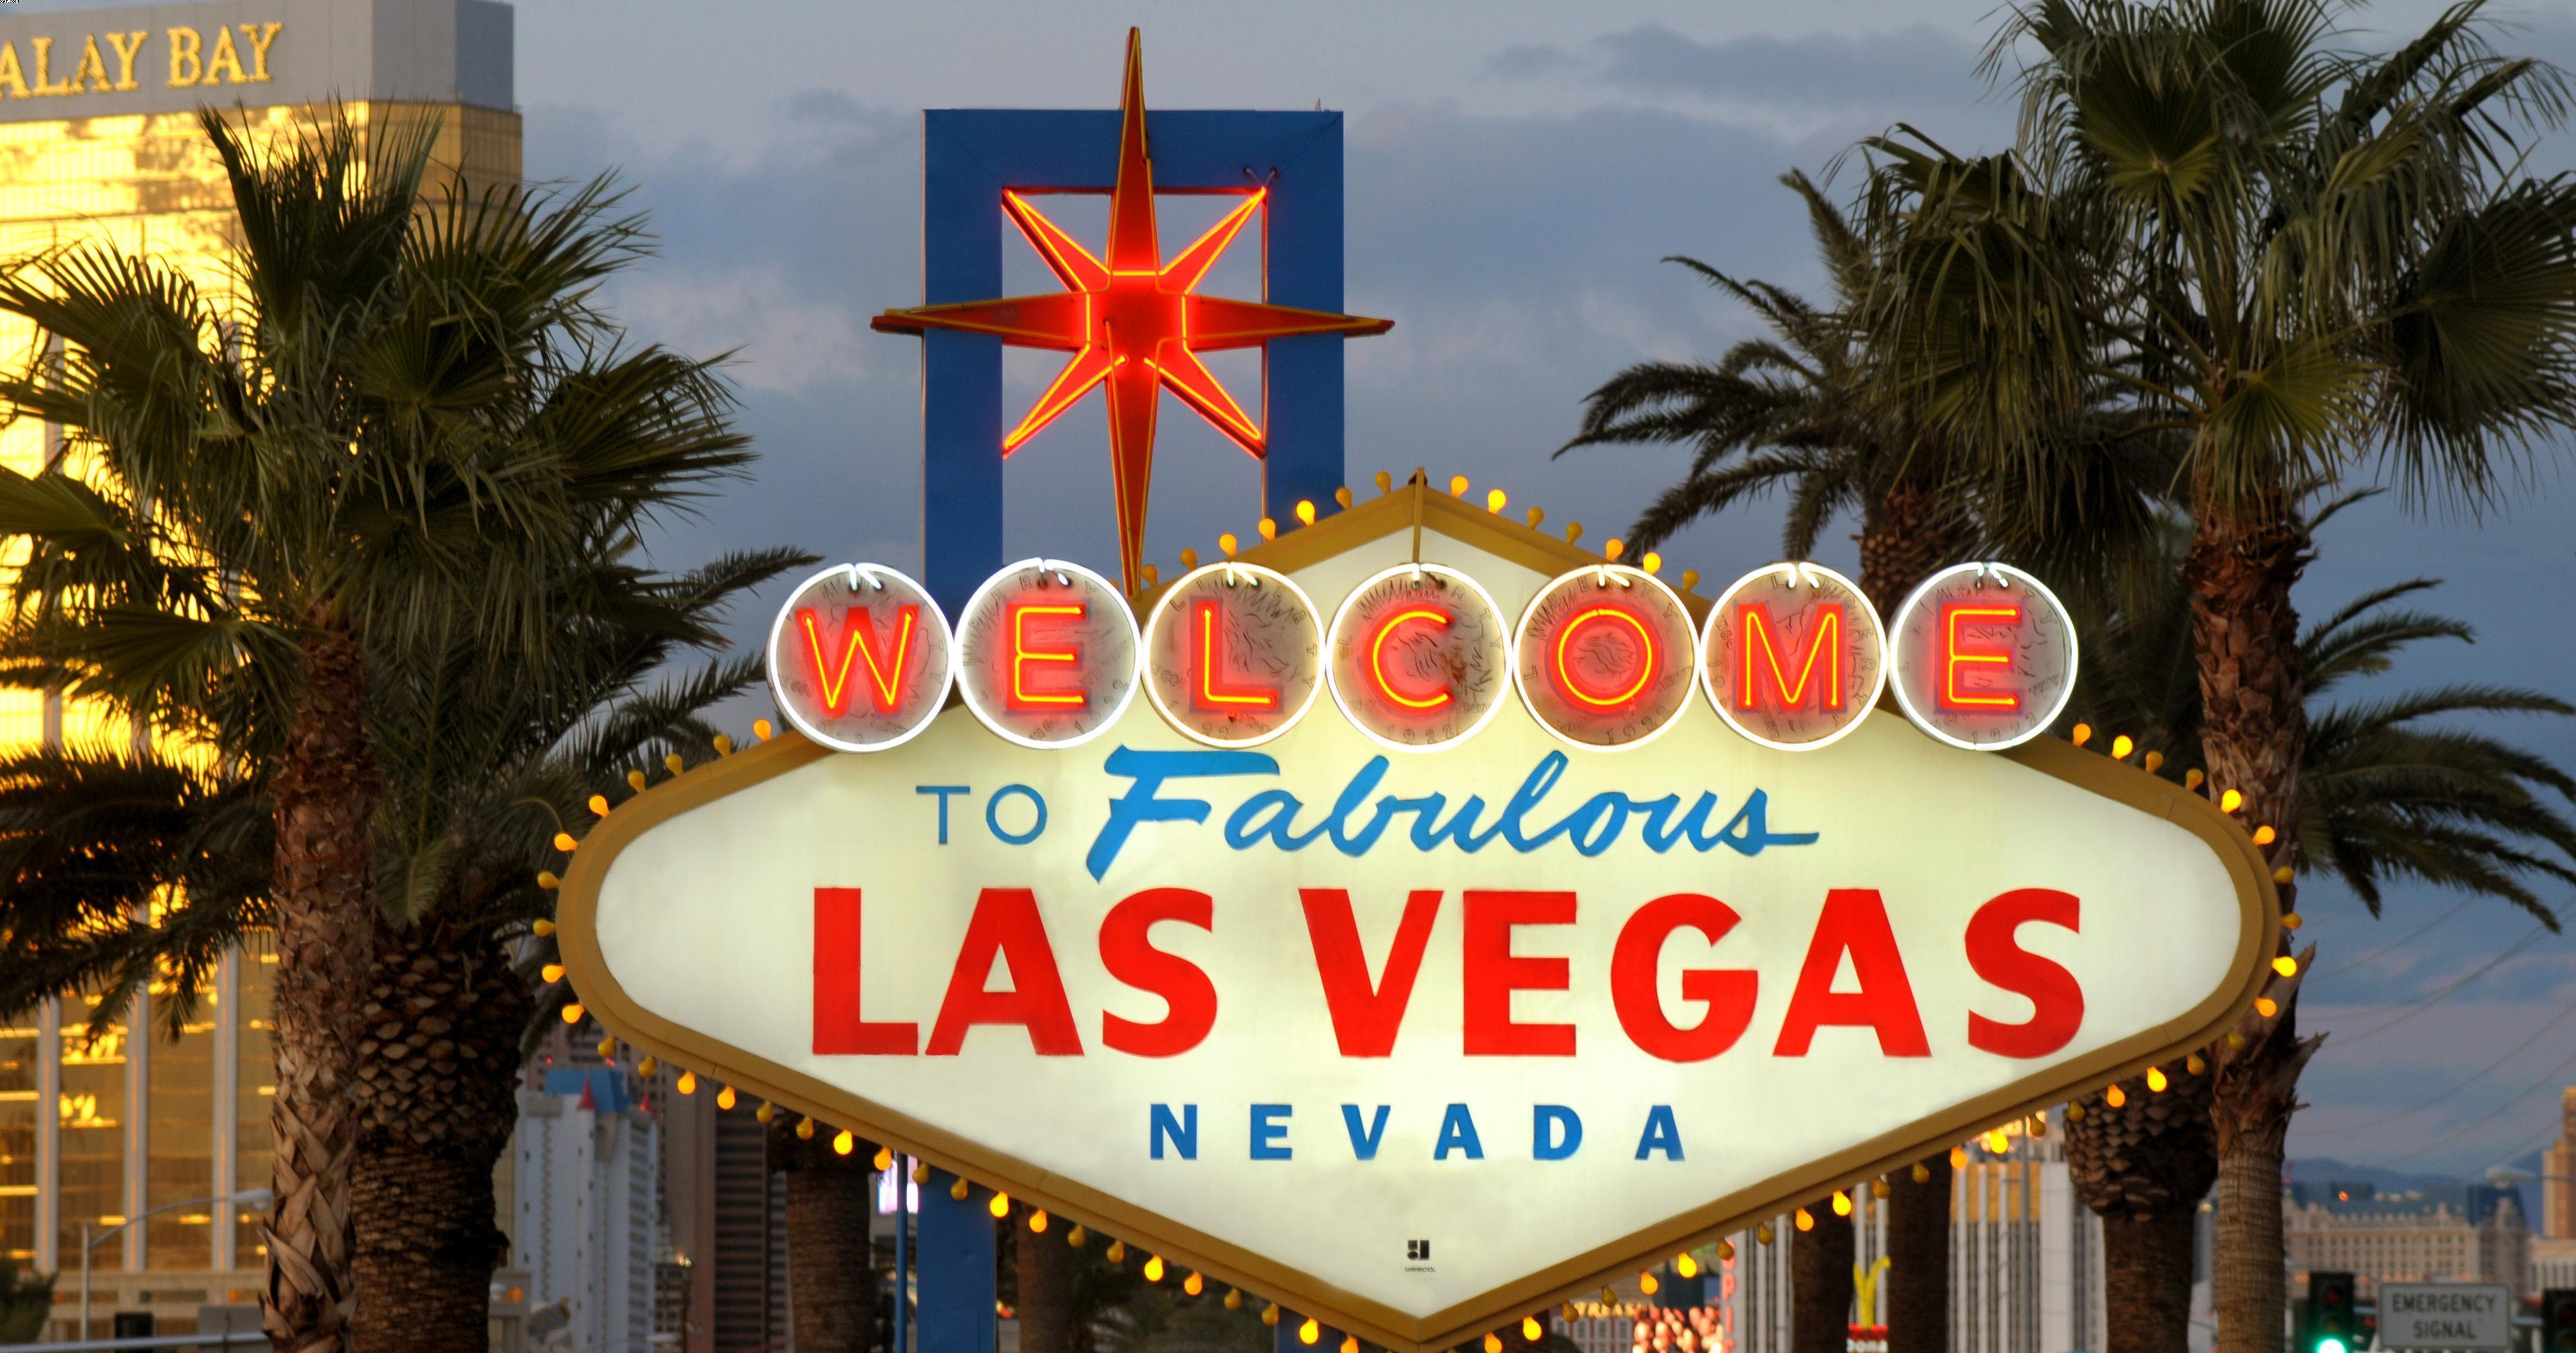 Free Attractions In Las Vegas